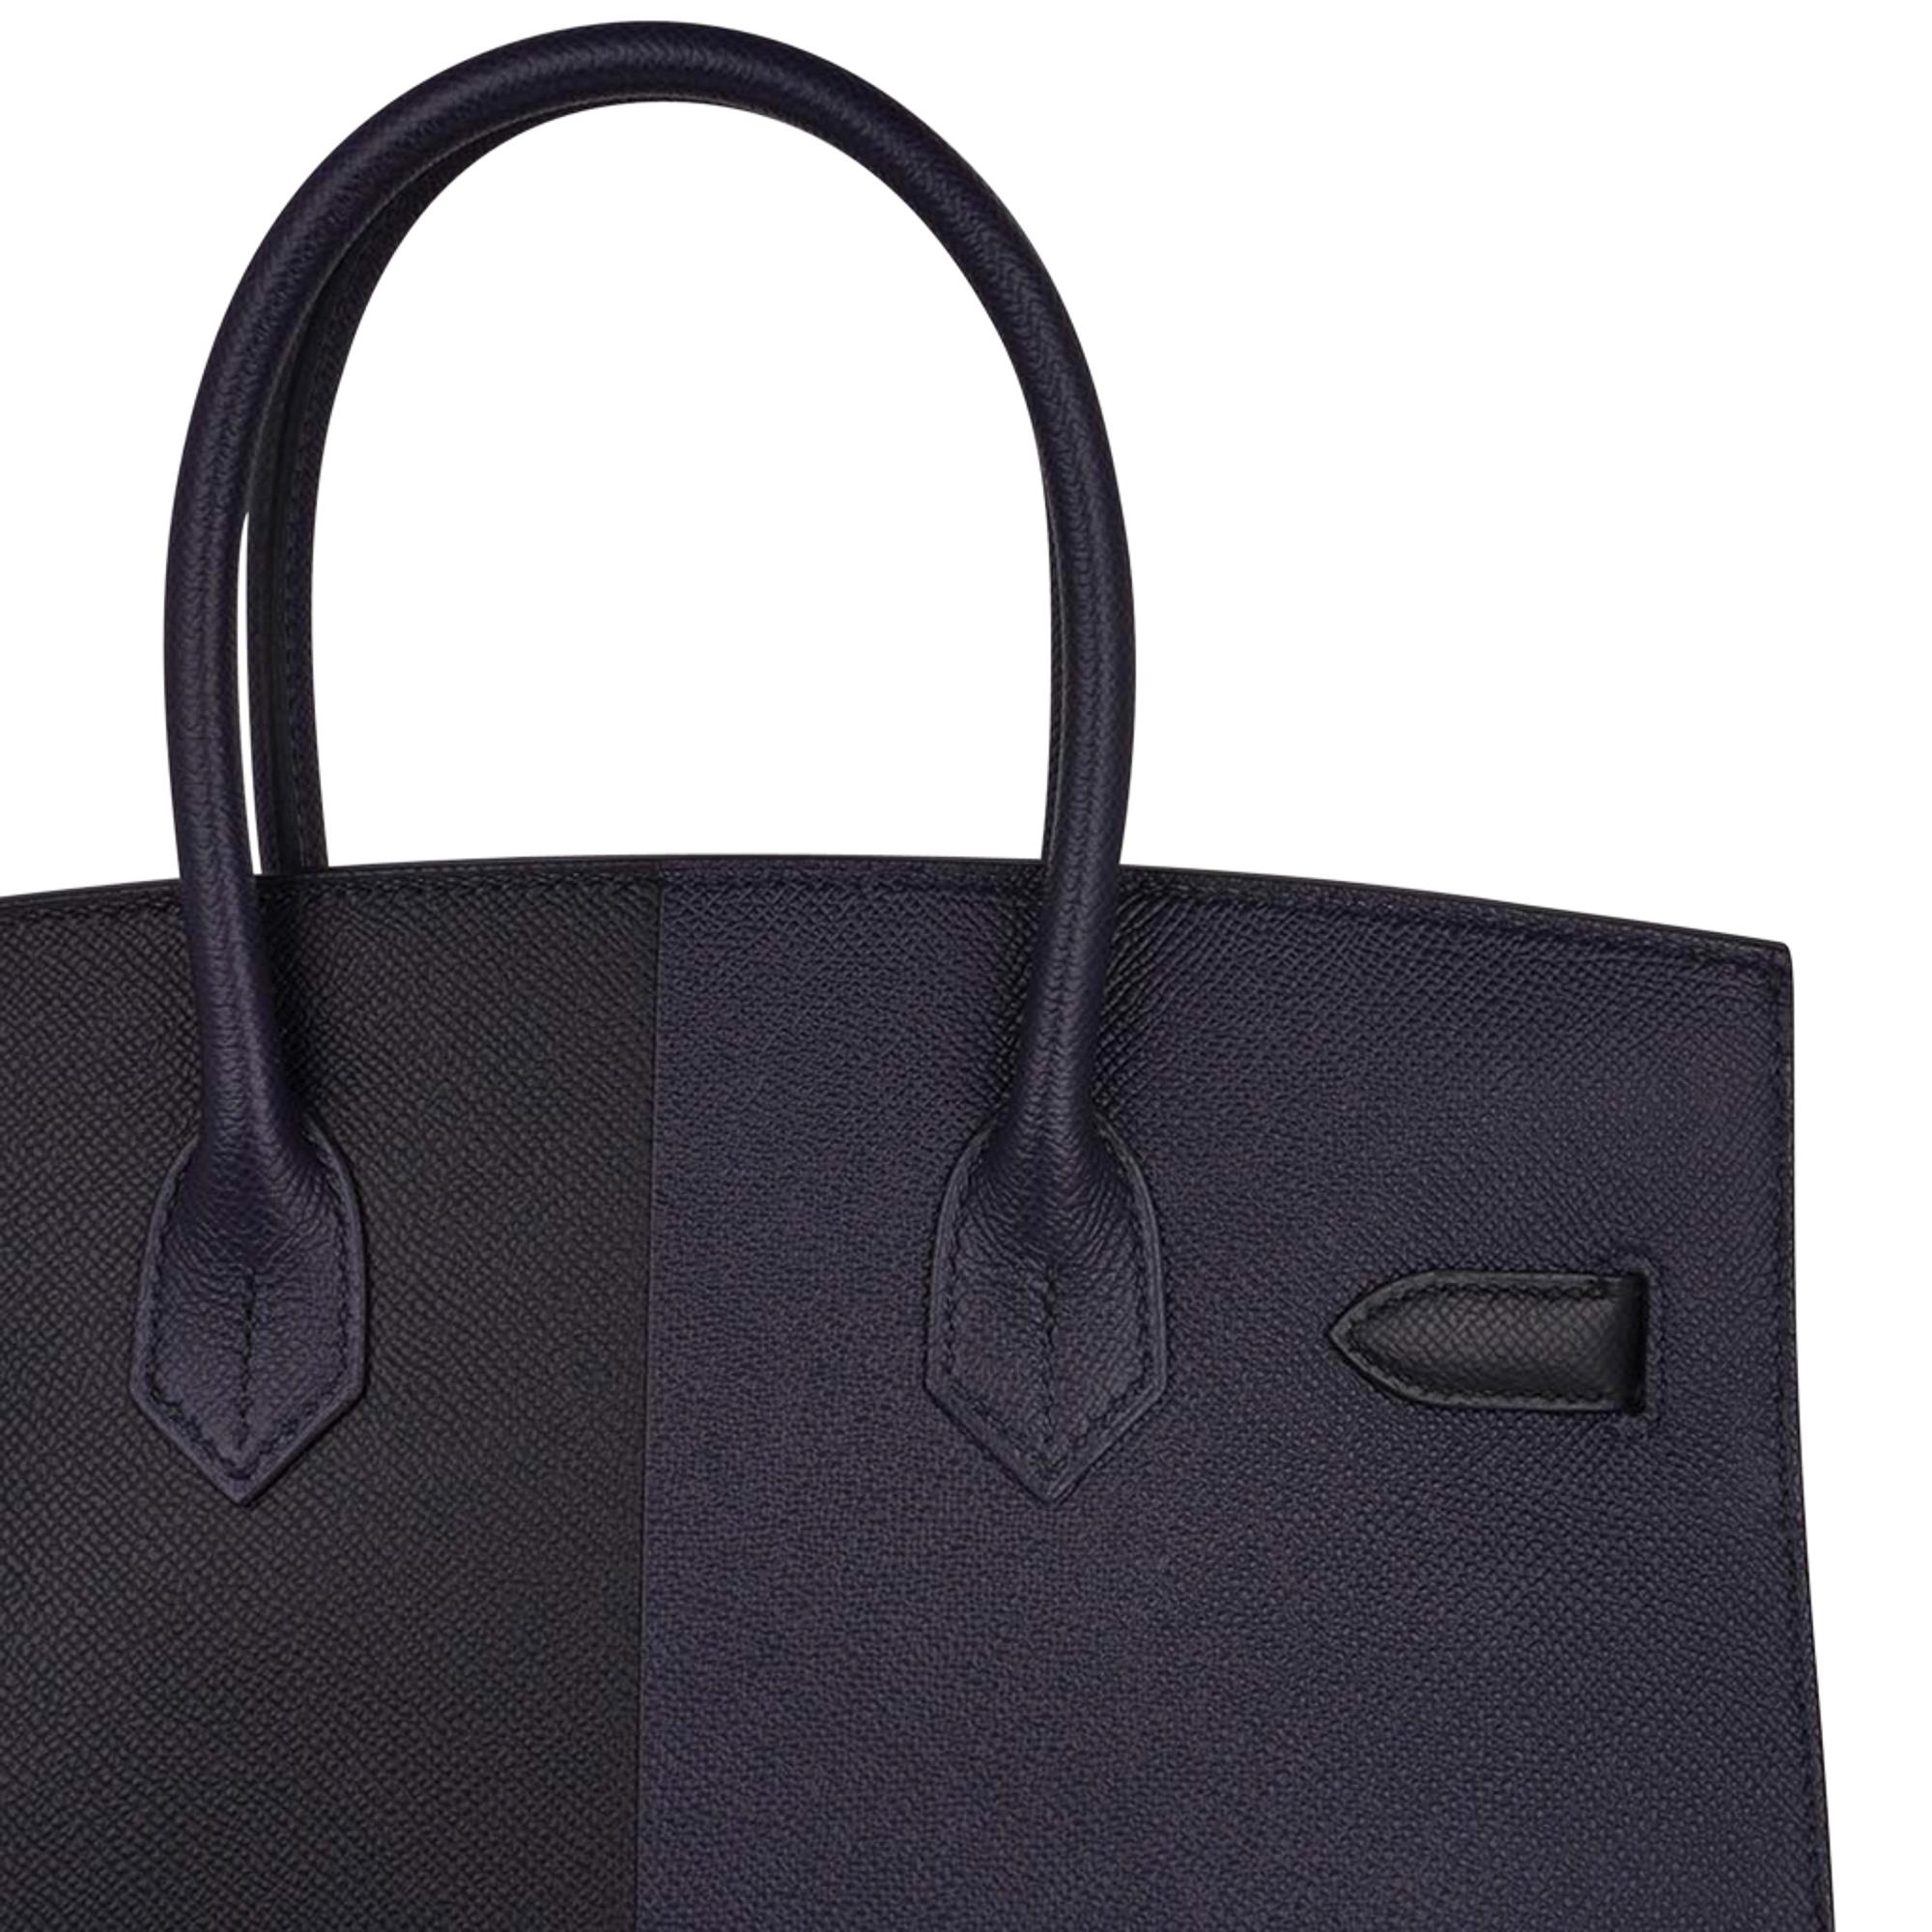 Hermes Birkin Sellier 30 Casaque Noir / Bleu Indigo / Bleu Frida Bag Epsom Gold  For Sale 4